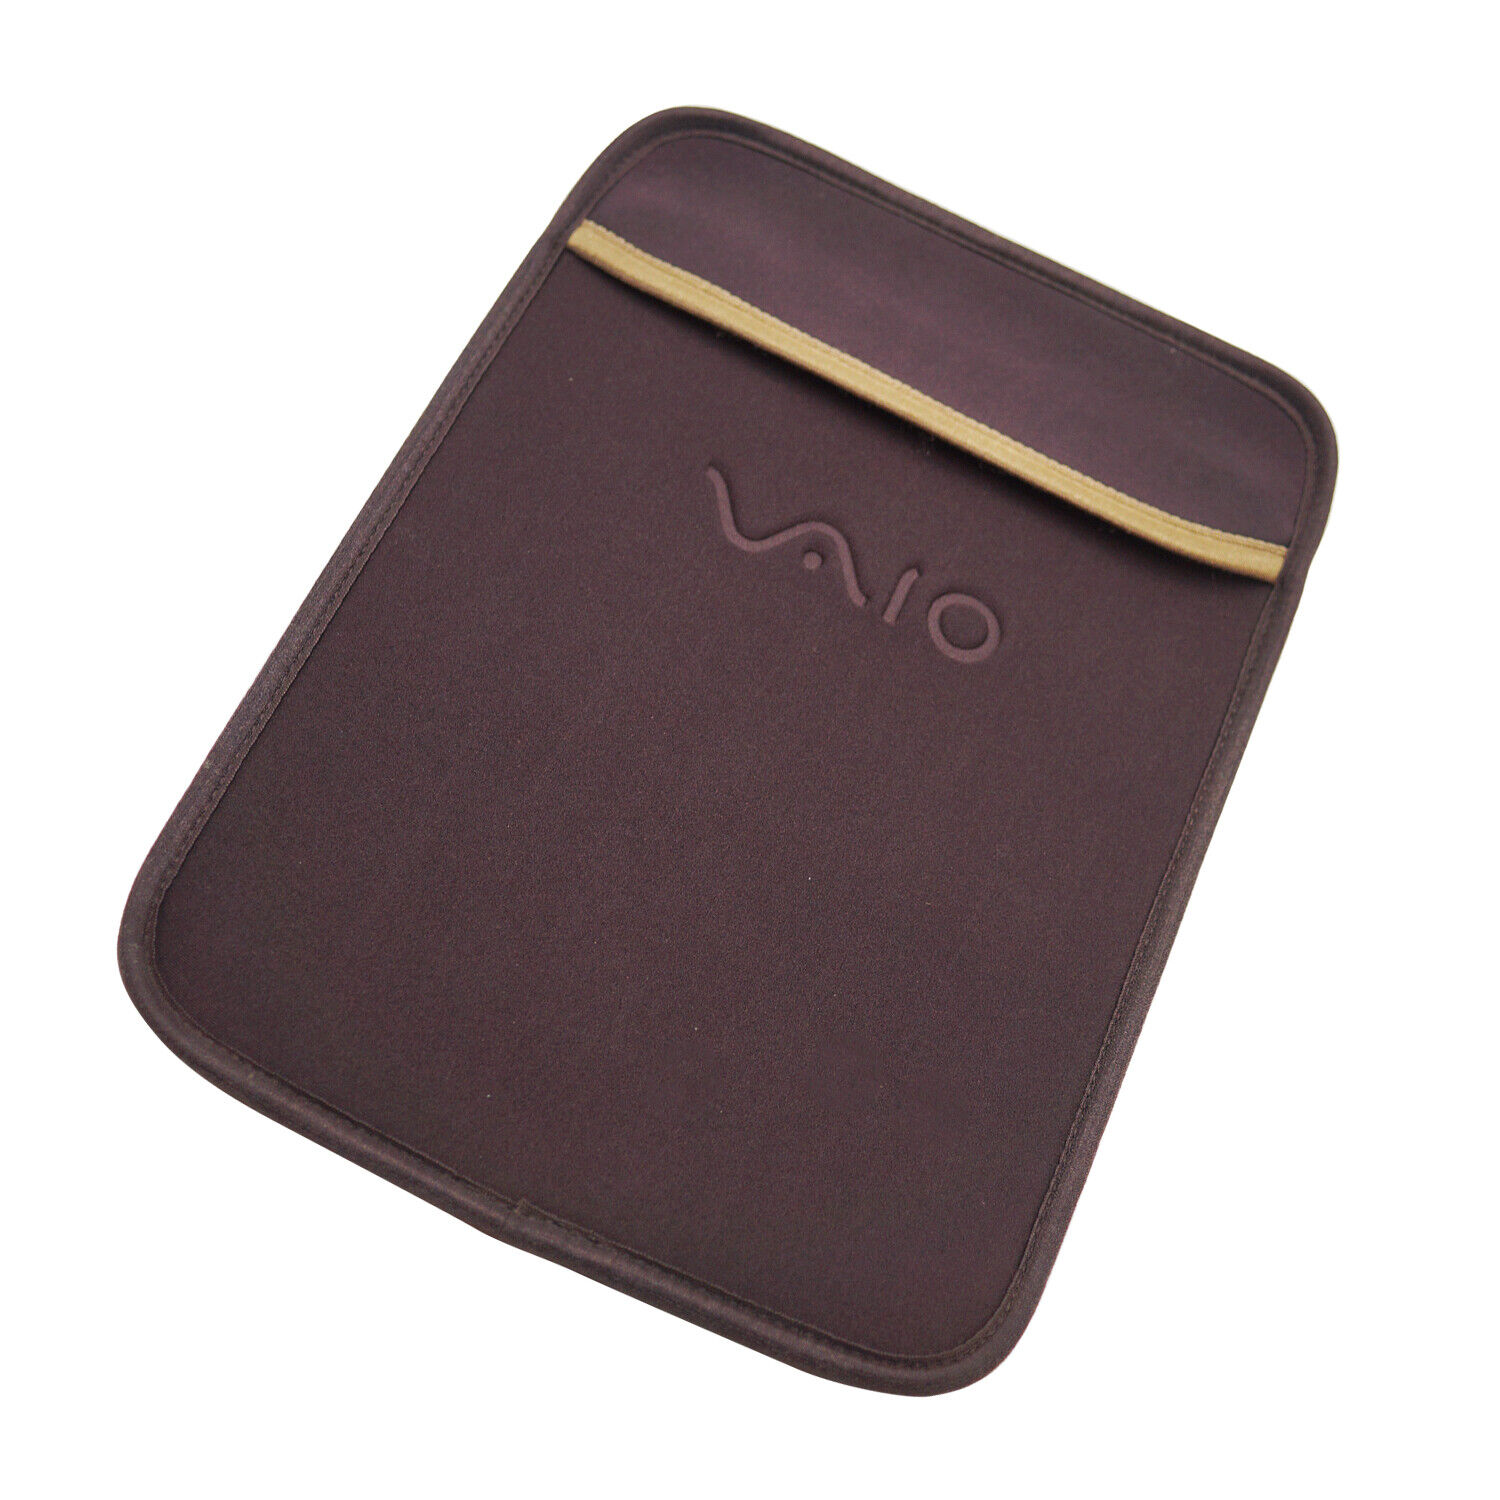 Sony Vaio Mini Notebook Sleeve Zipperless Closure | 13